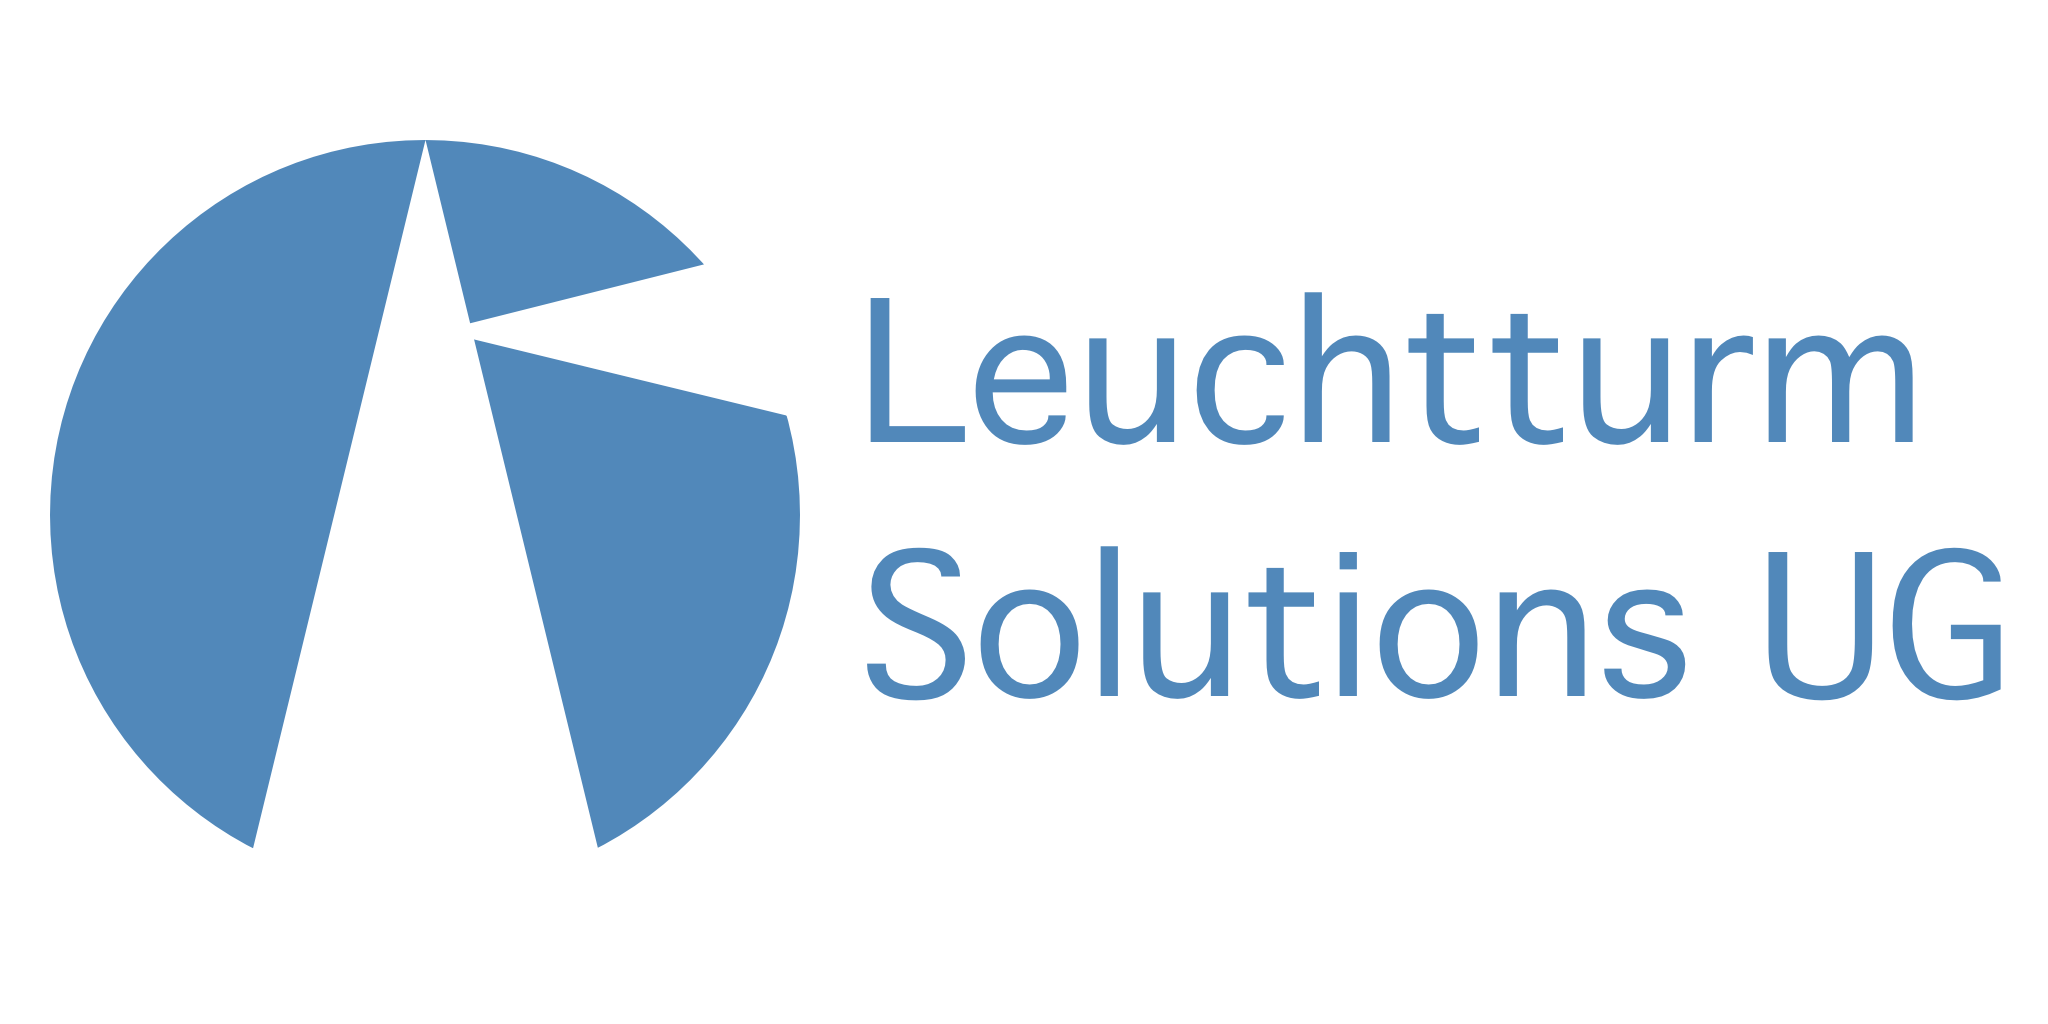 [IMAGE] Leuchtturm Solutions logo